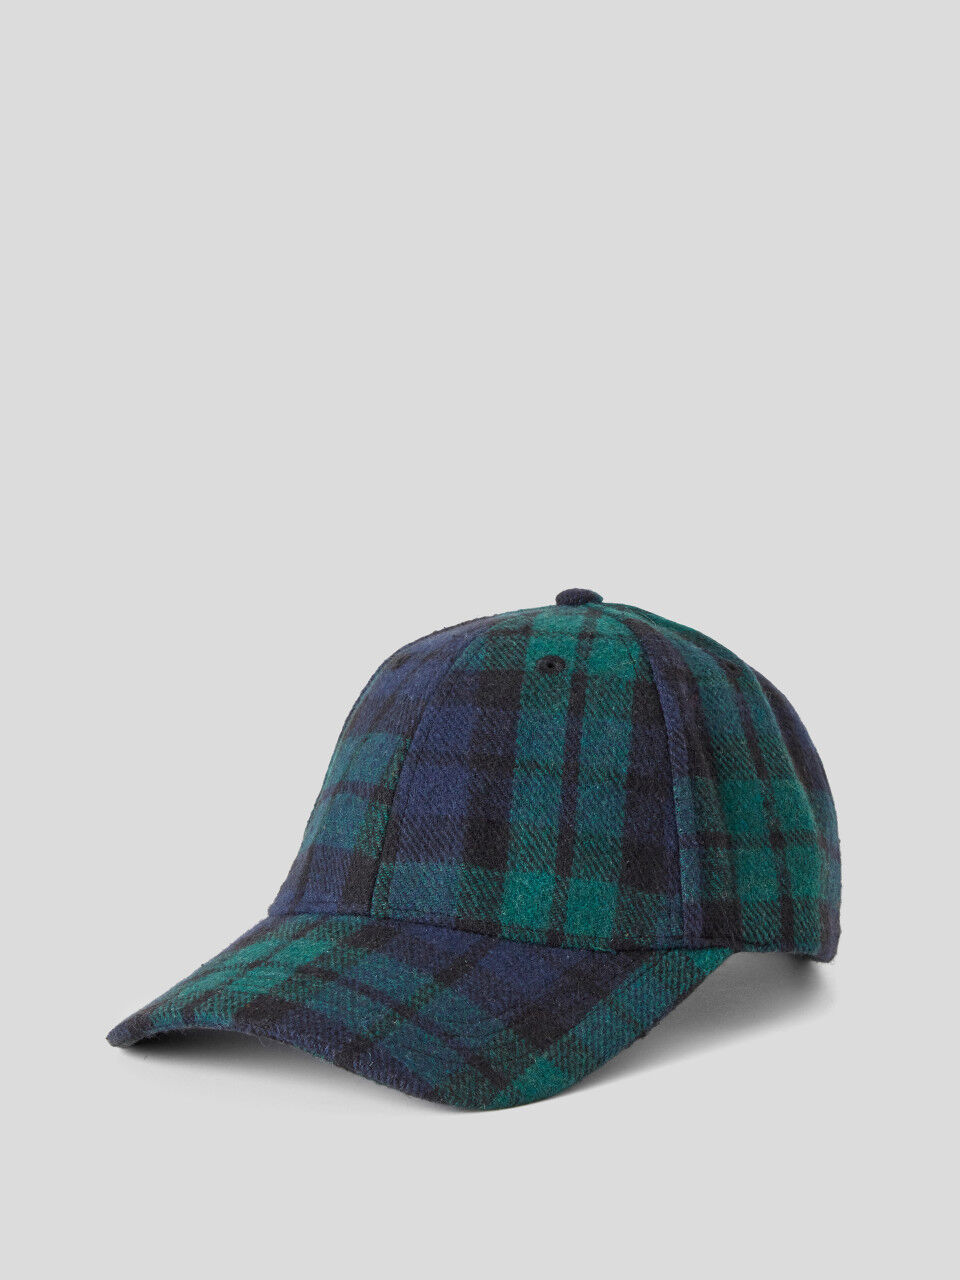 Baseball cap with check pattern